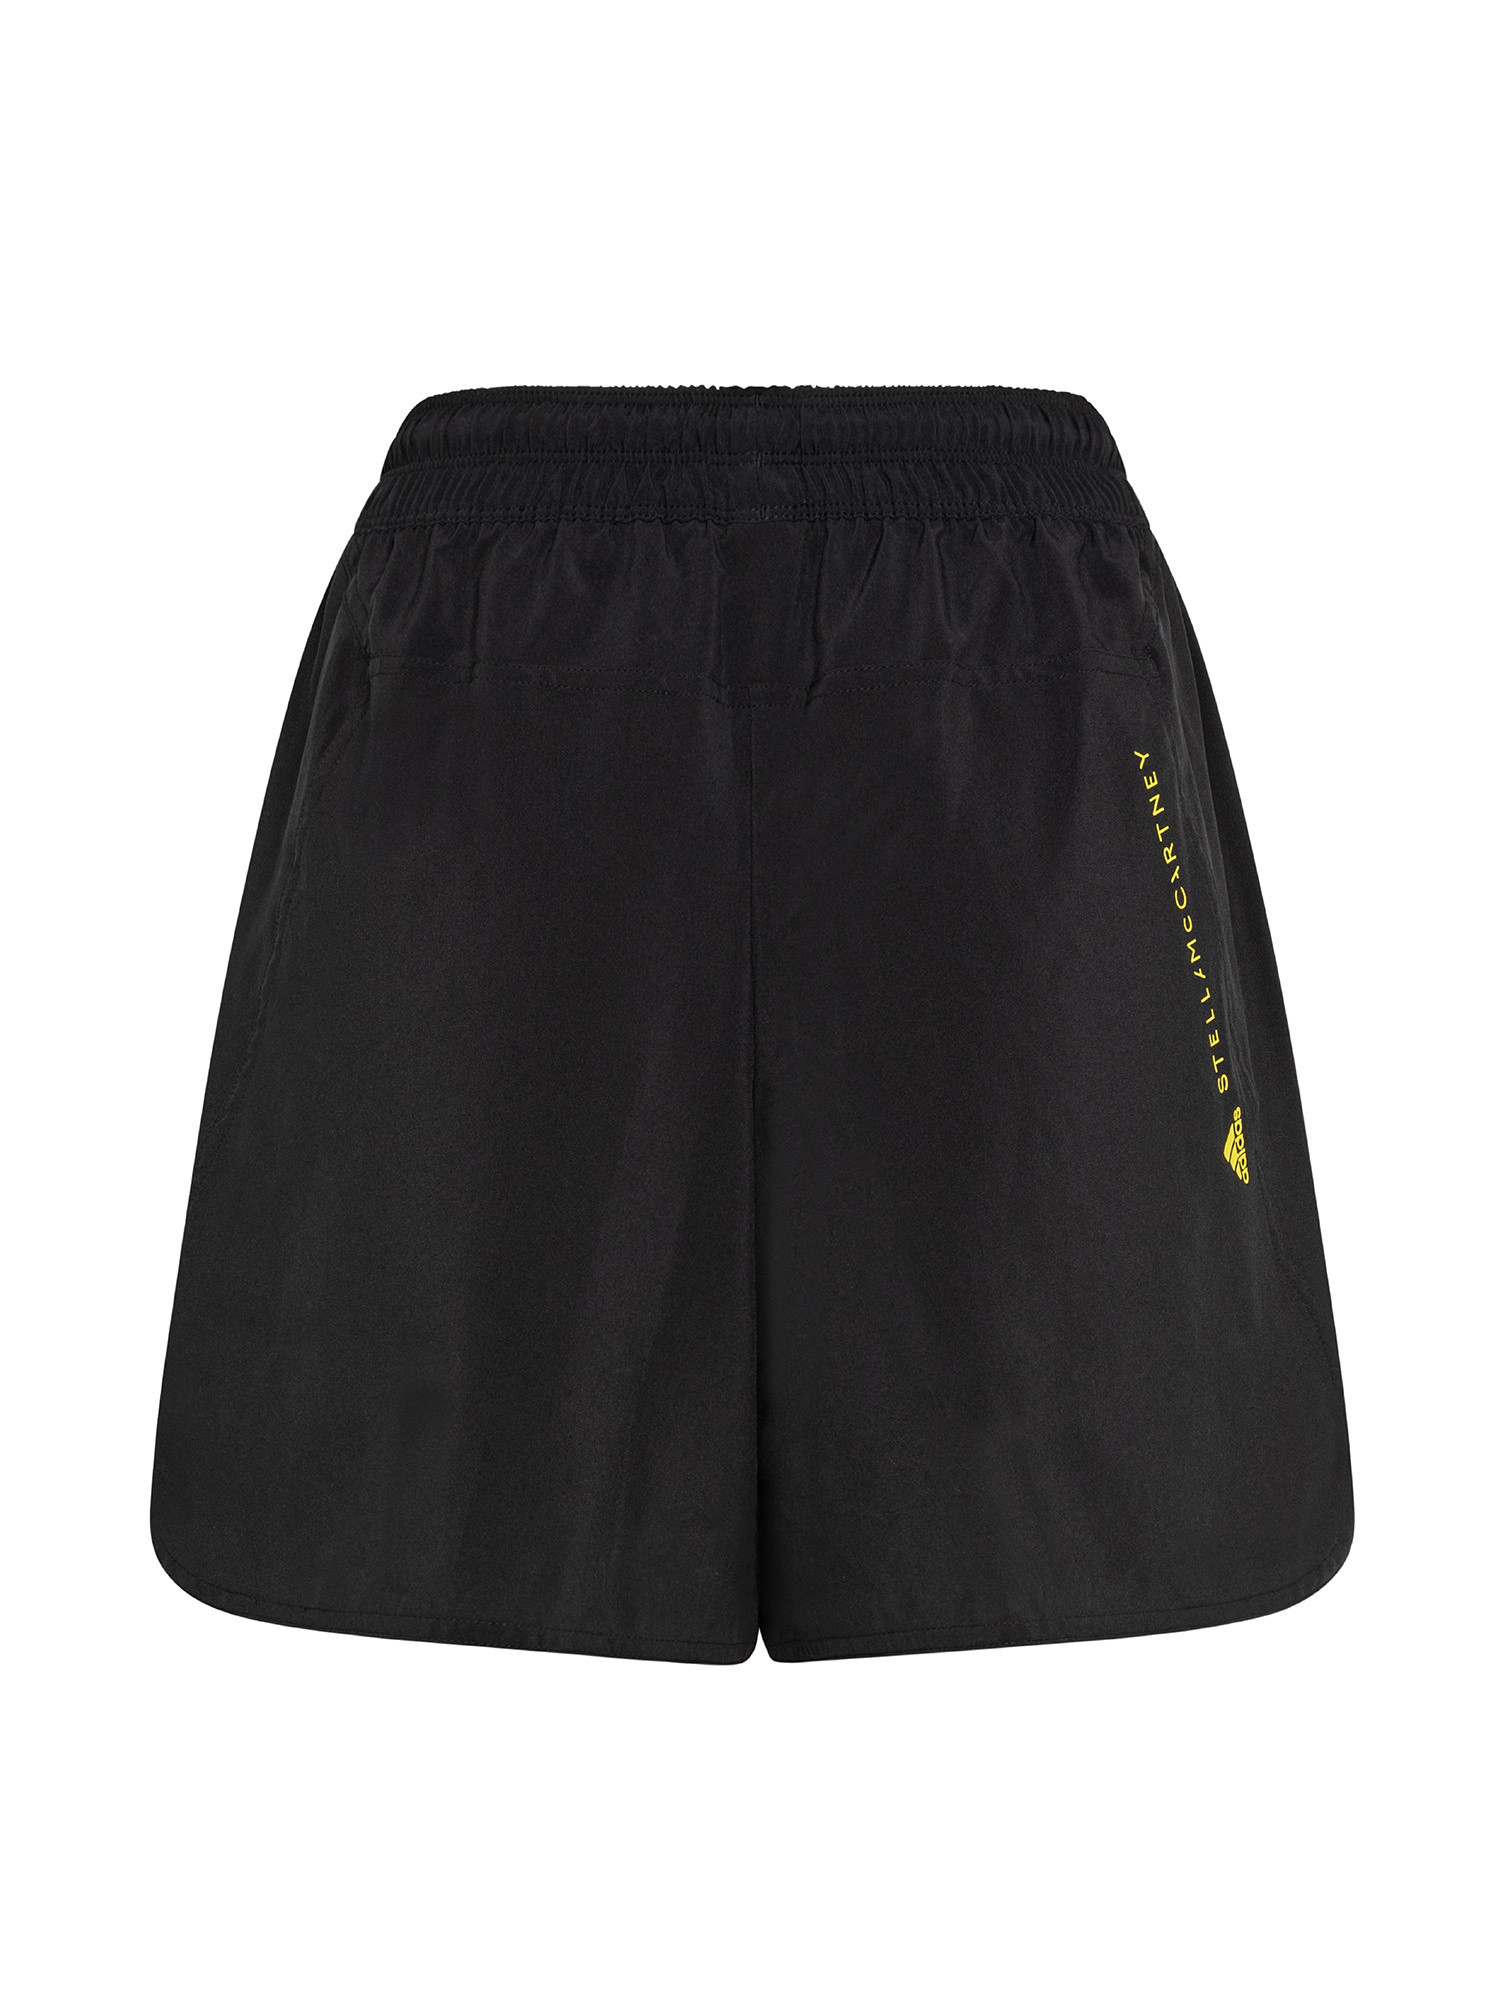 Adidas by Stella McCartney - TruePurpose training shorts, Black, large image number 1